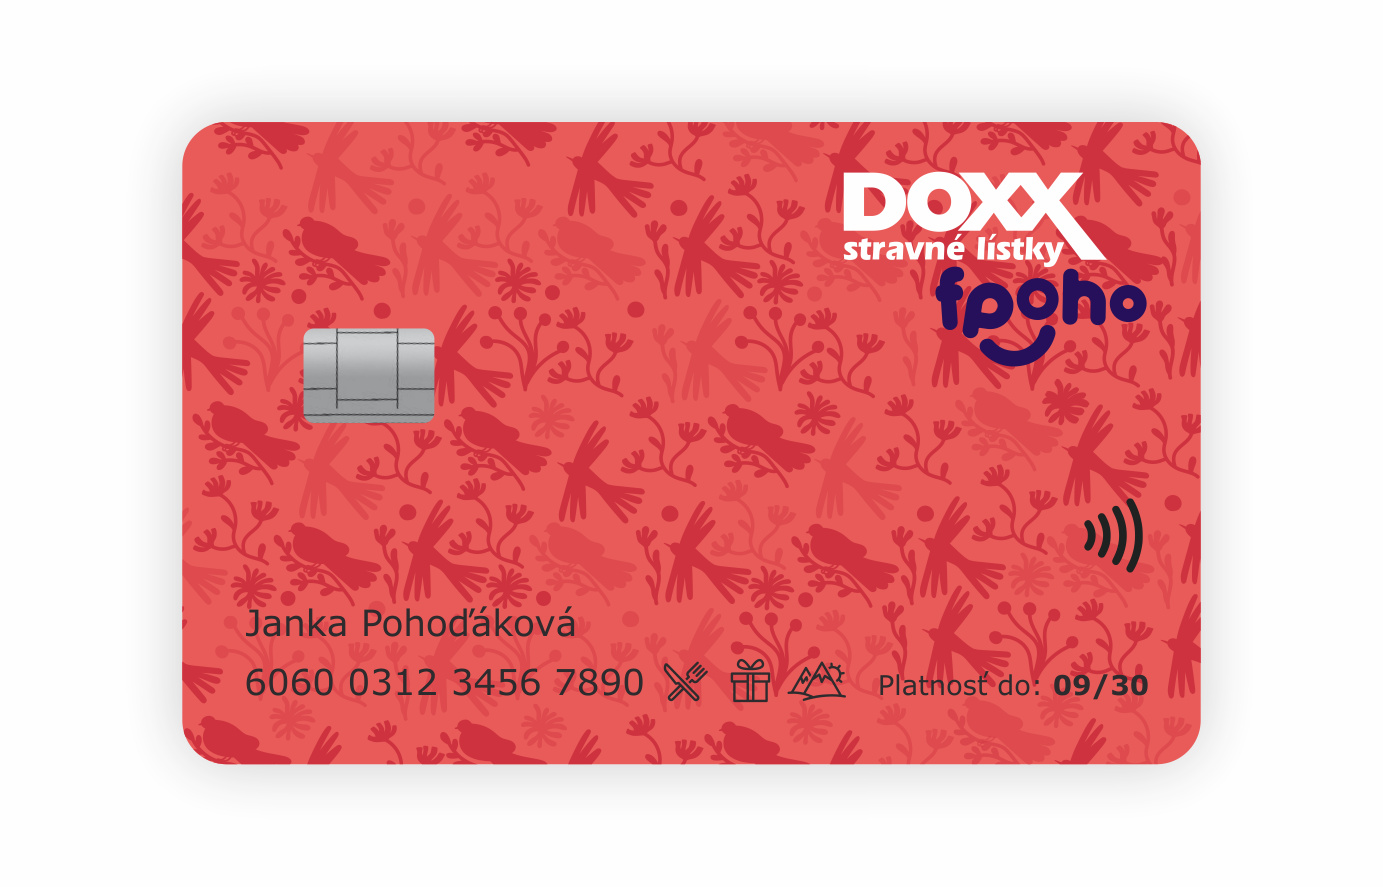 Karta DOXX fpoho 2022 - Stravenky